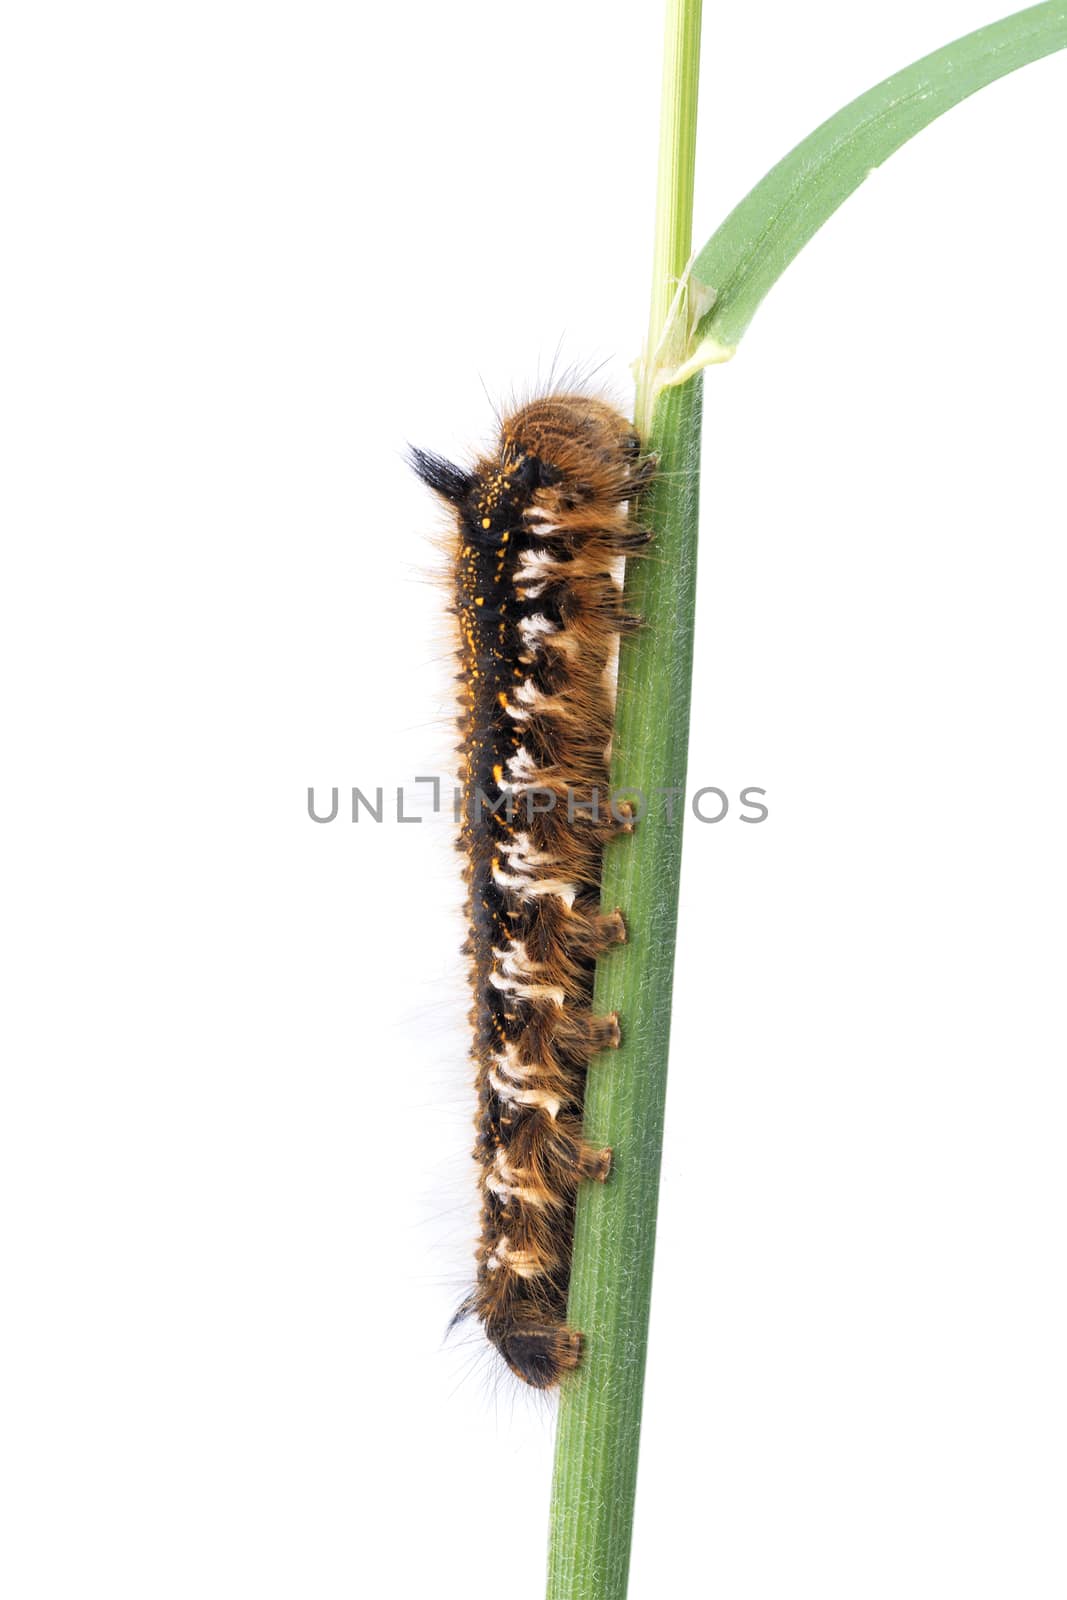 Caterpillar of Euthrix potatoria on a white background by neryx